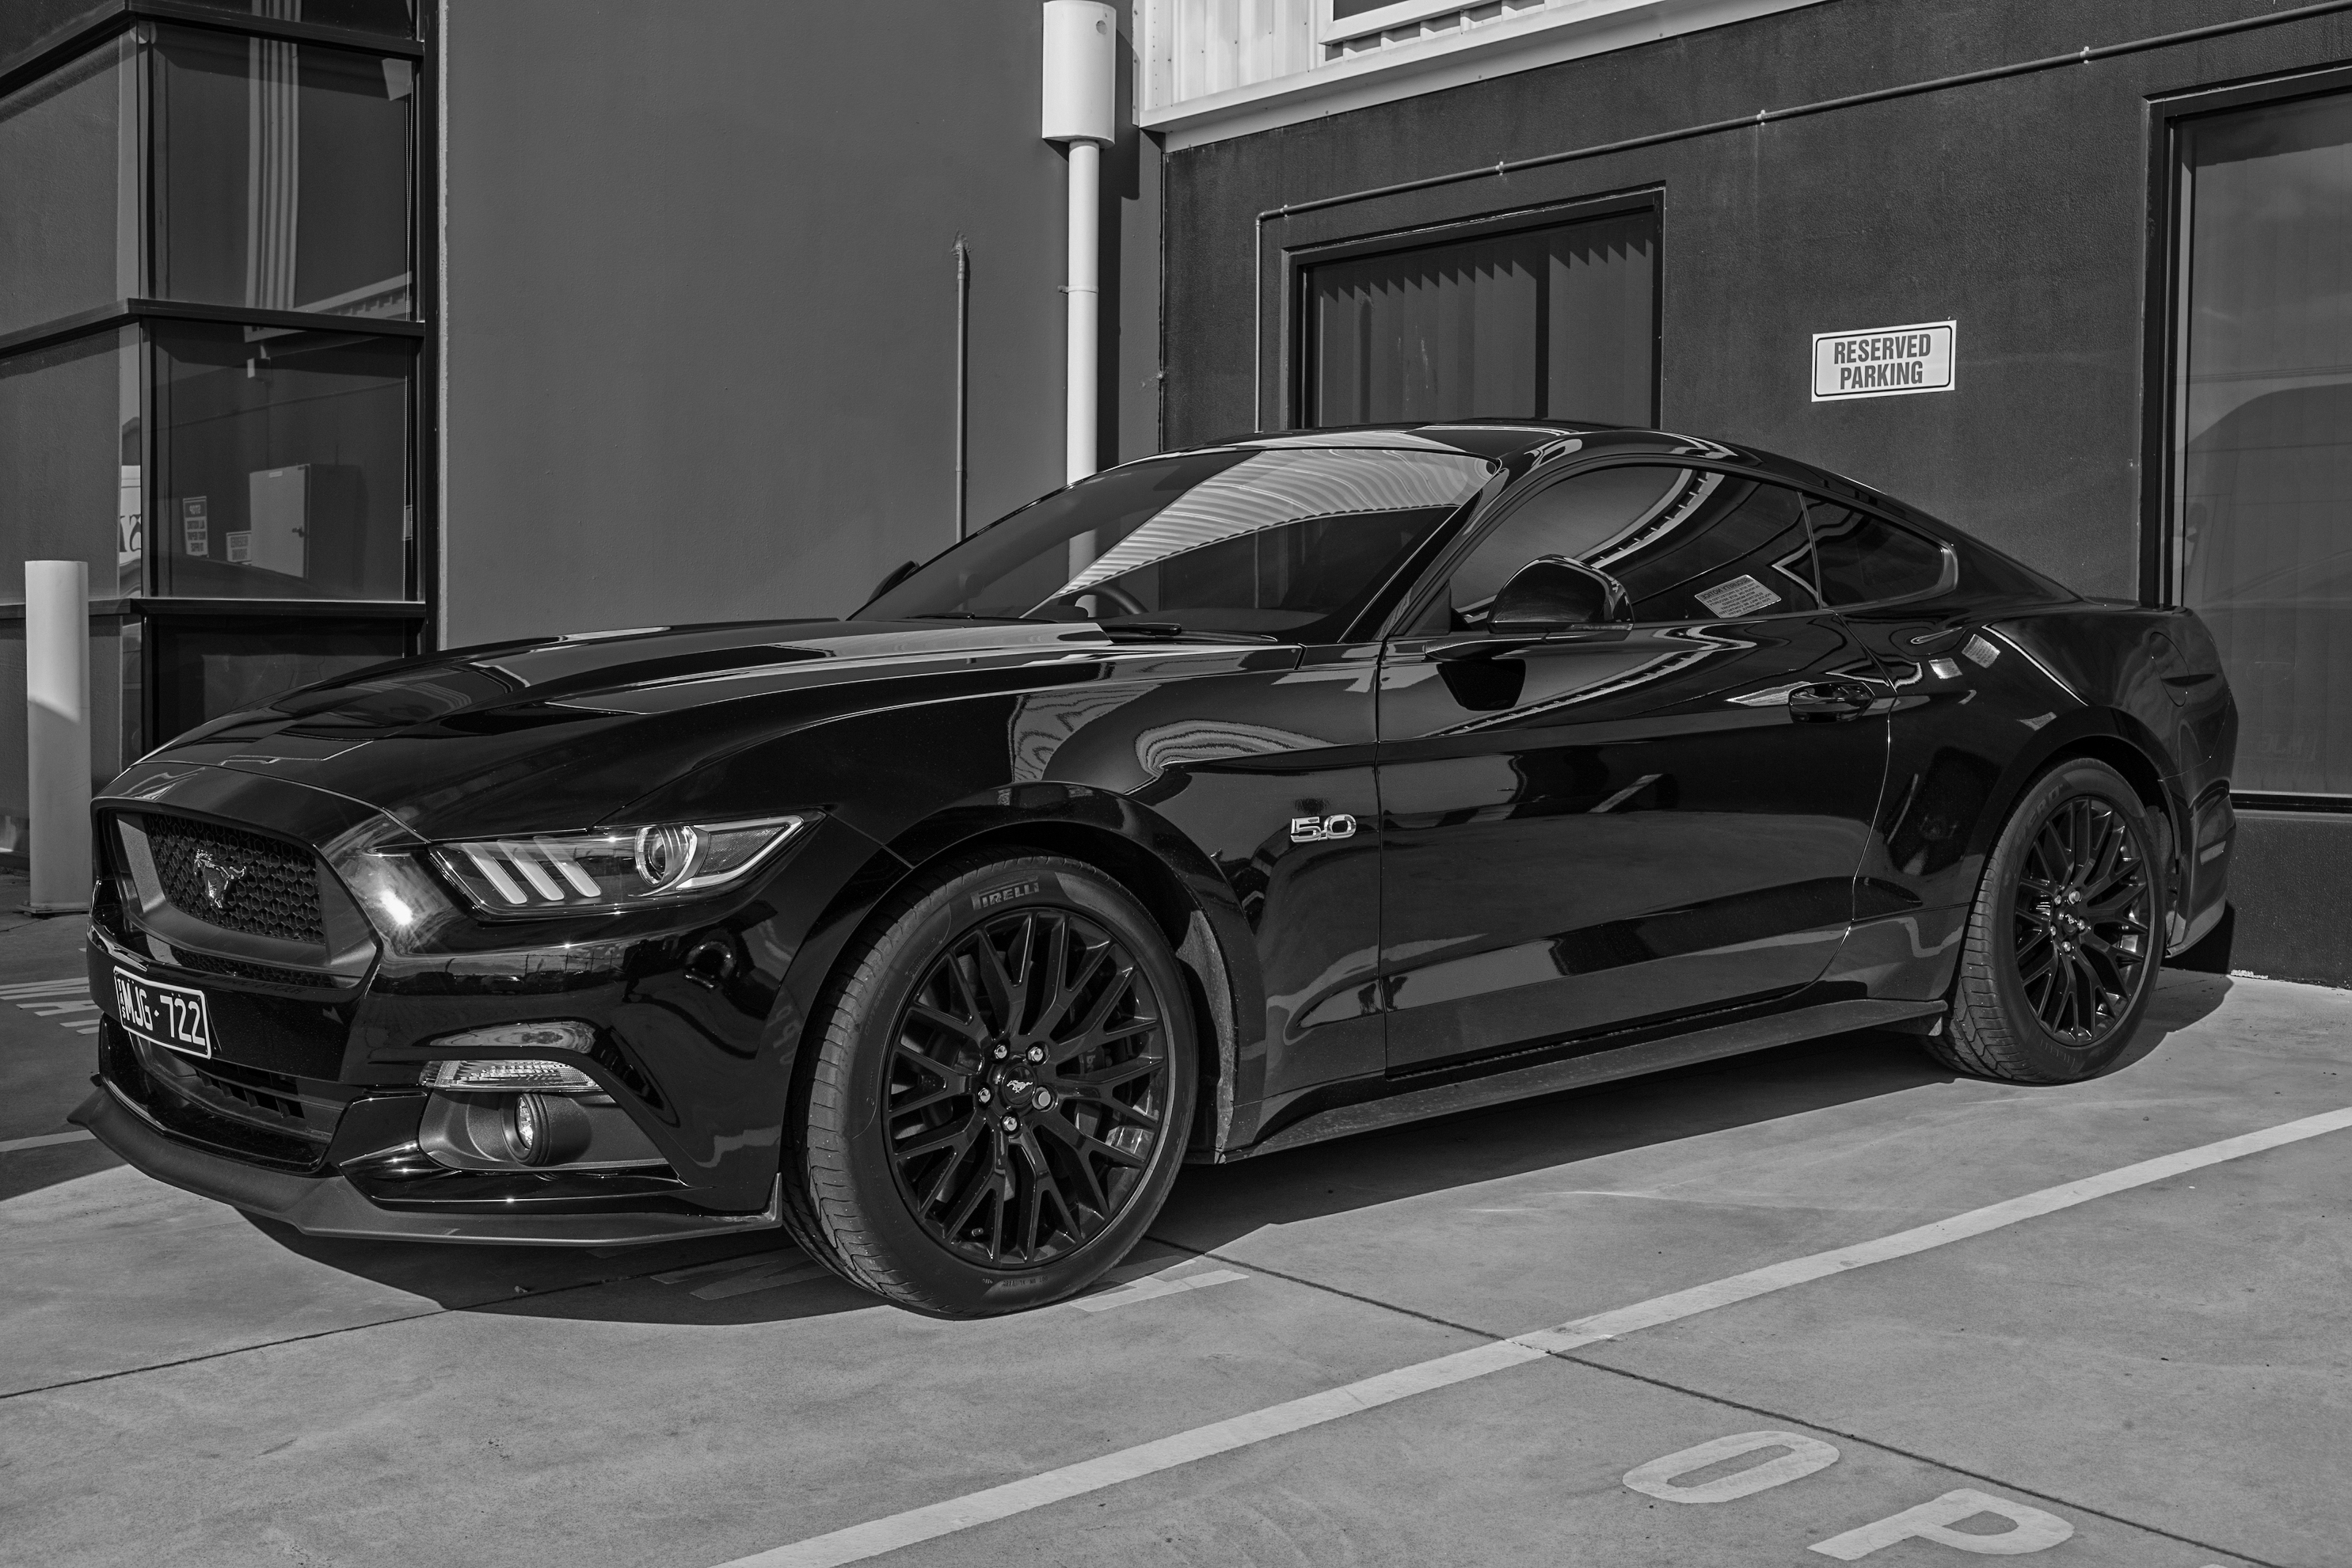 Black Mustang - Toll